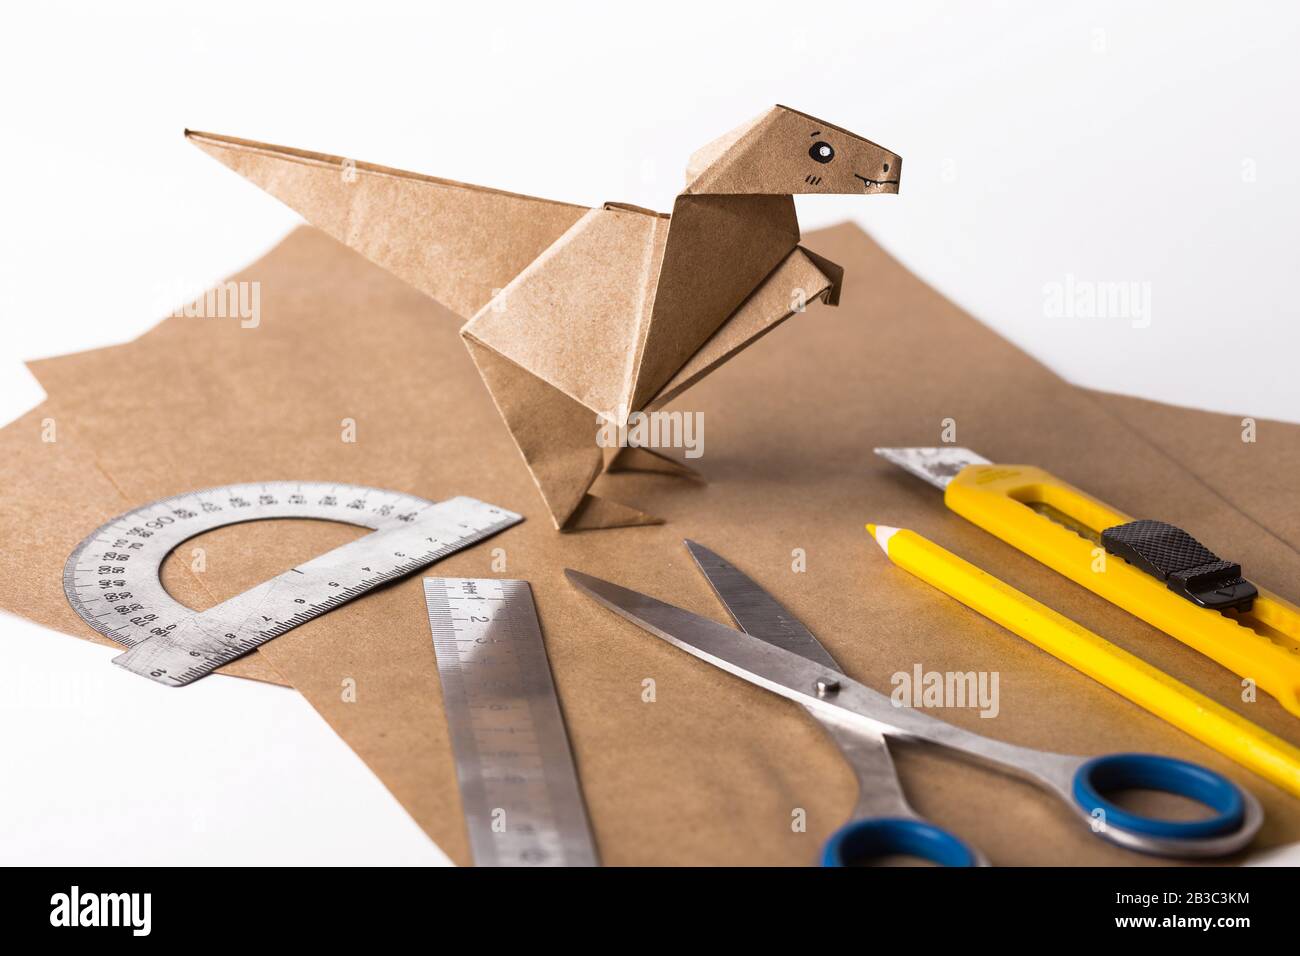 origami dinosaur made of paper. paper, ruler, pencils, knife. interesting hobby Stock Photo